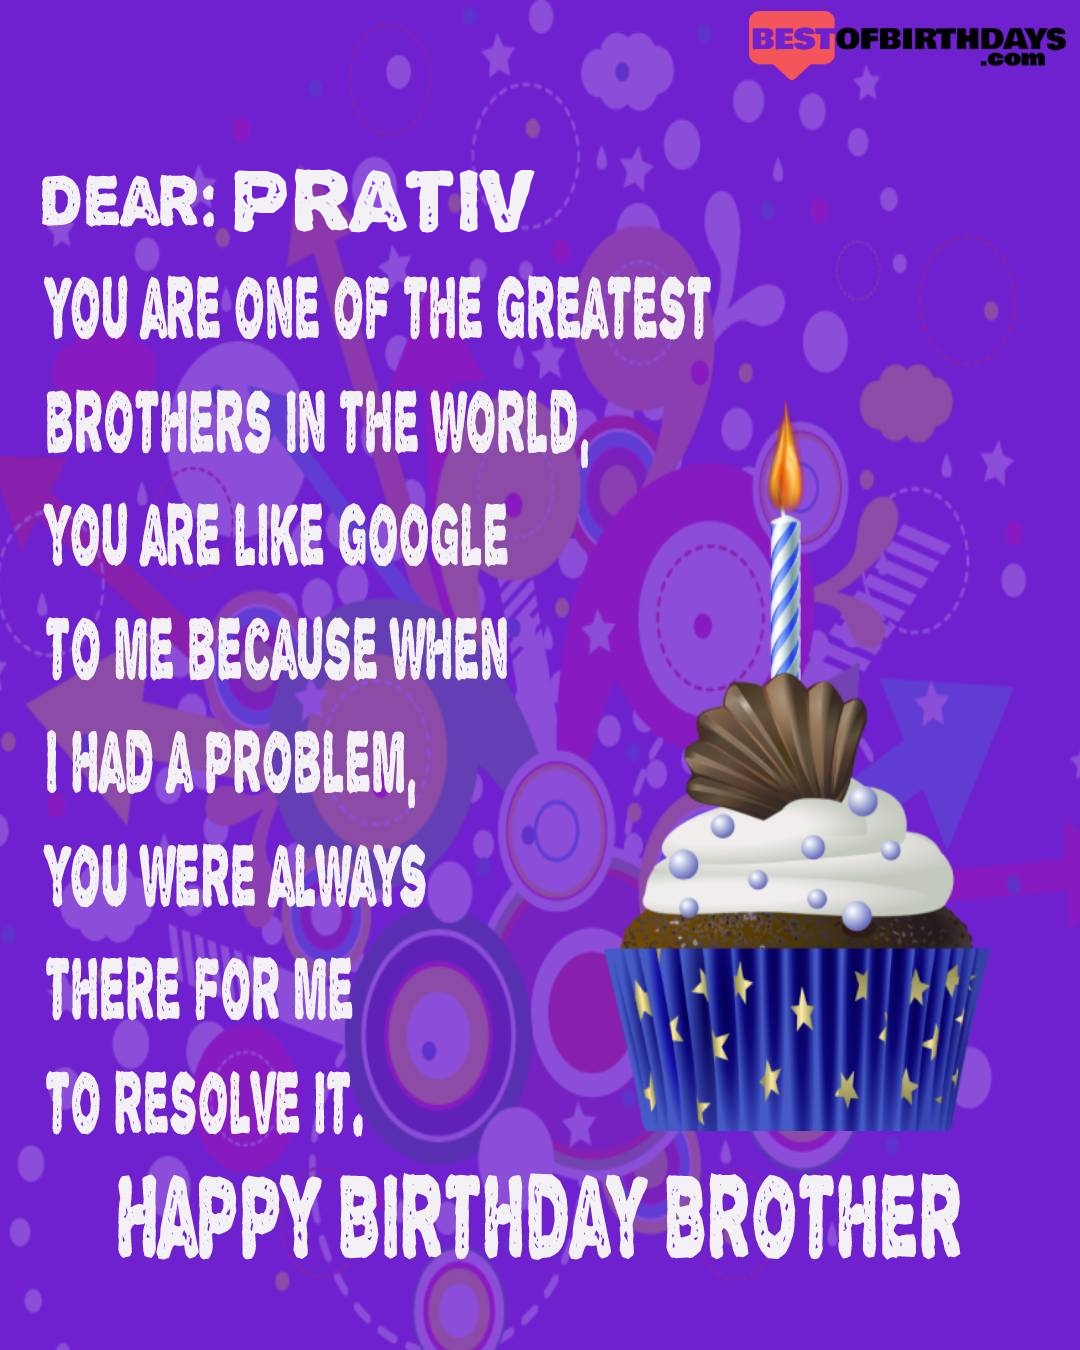 Happy birthday prativ bhai brother bro